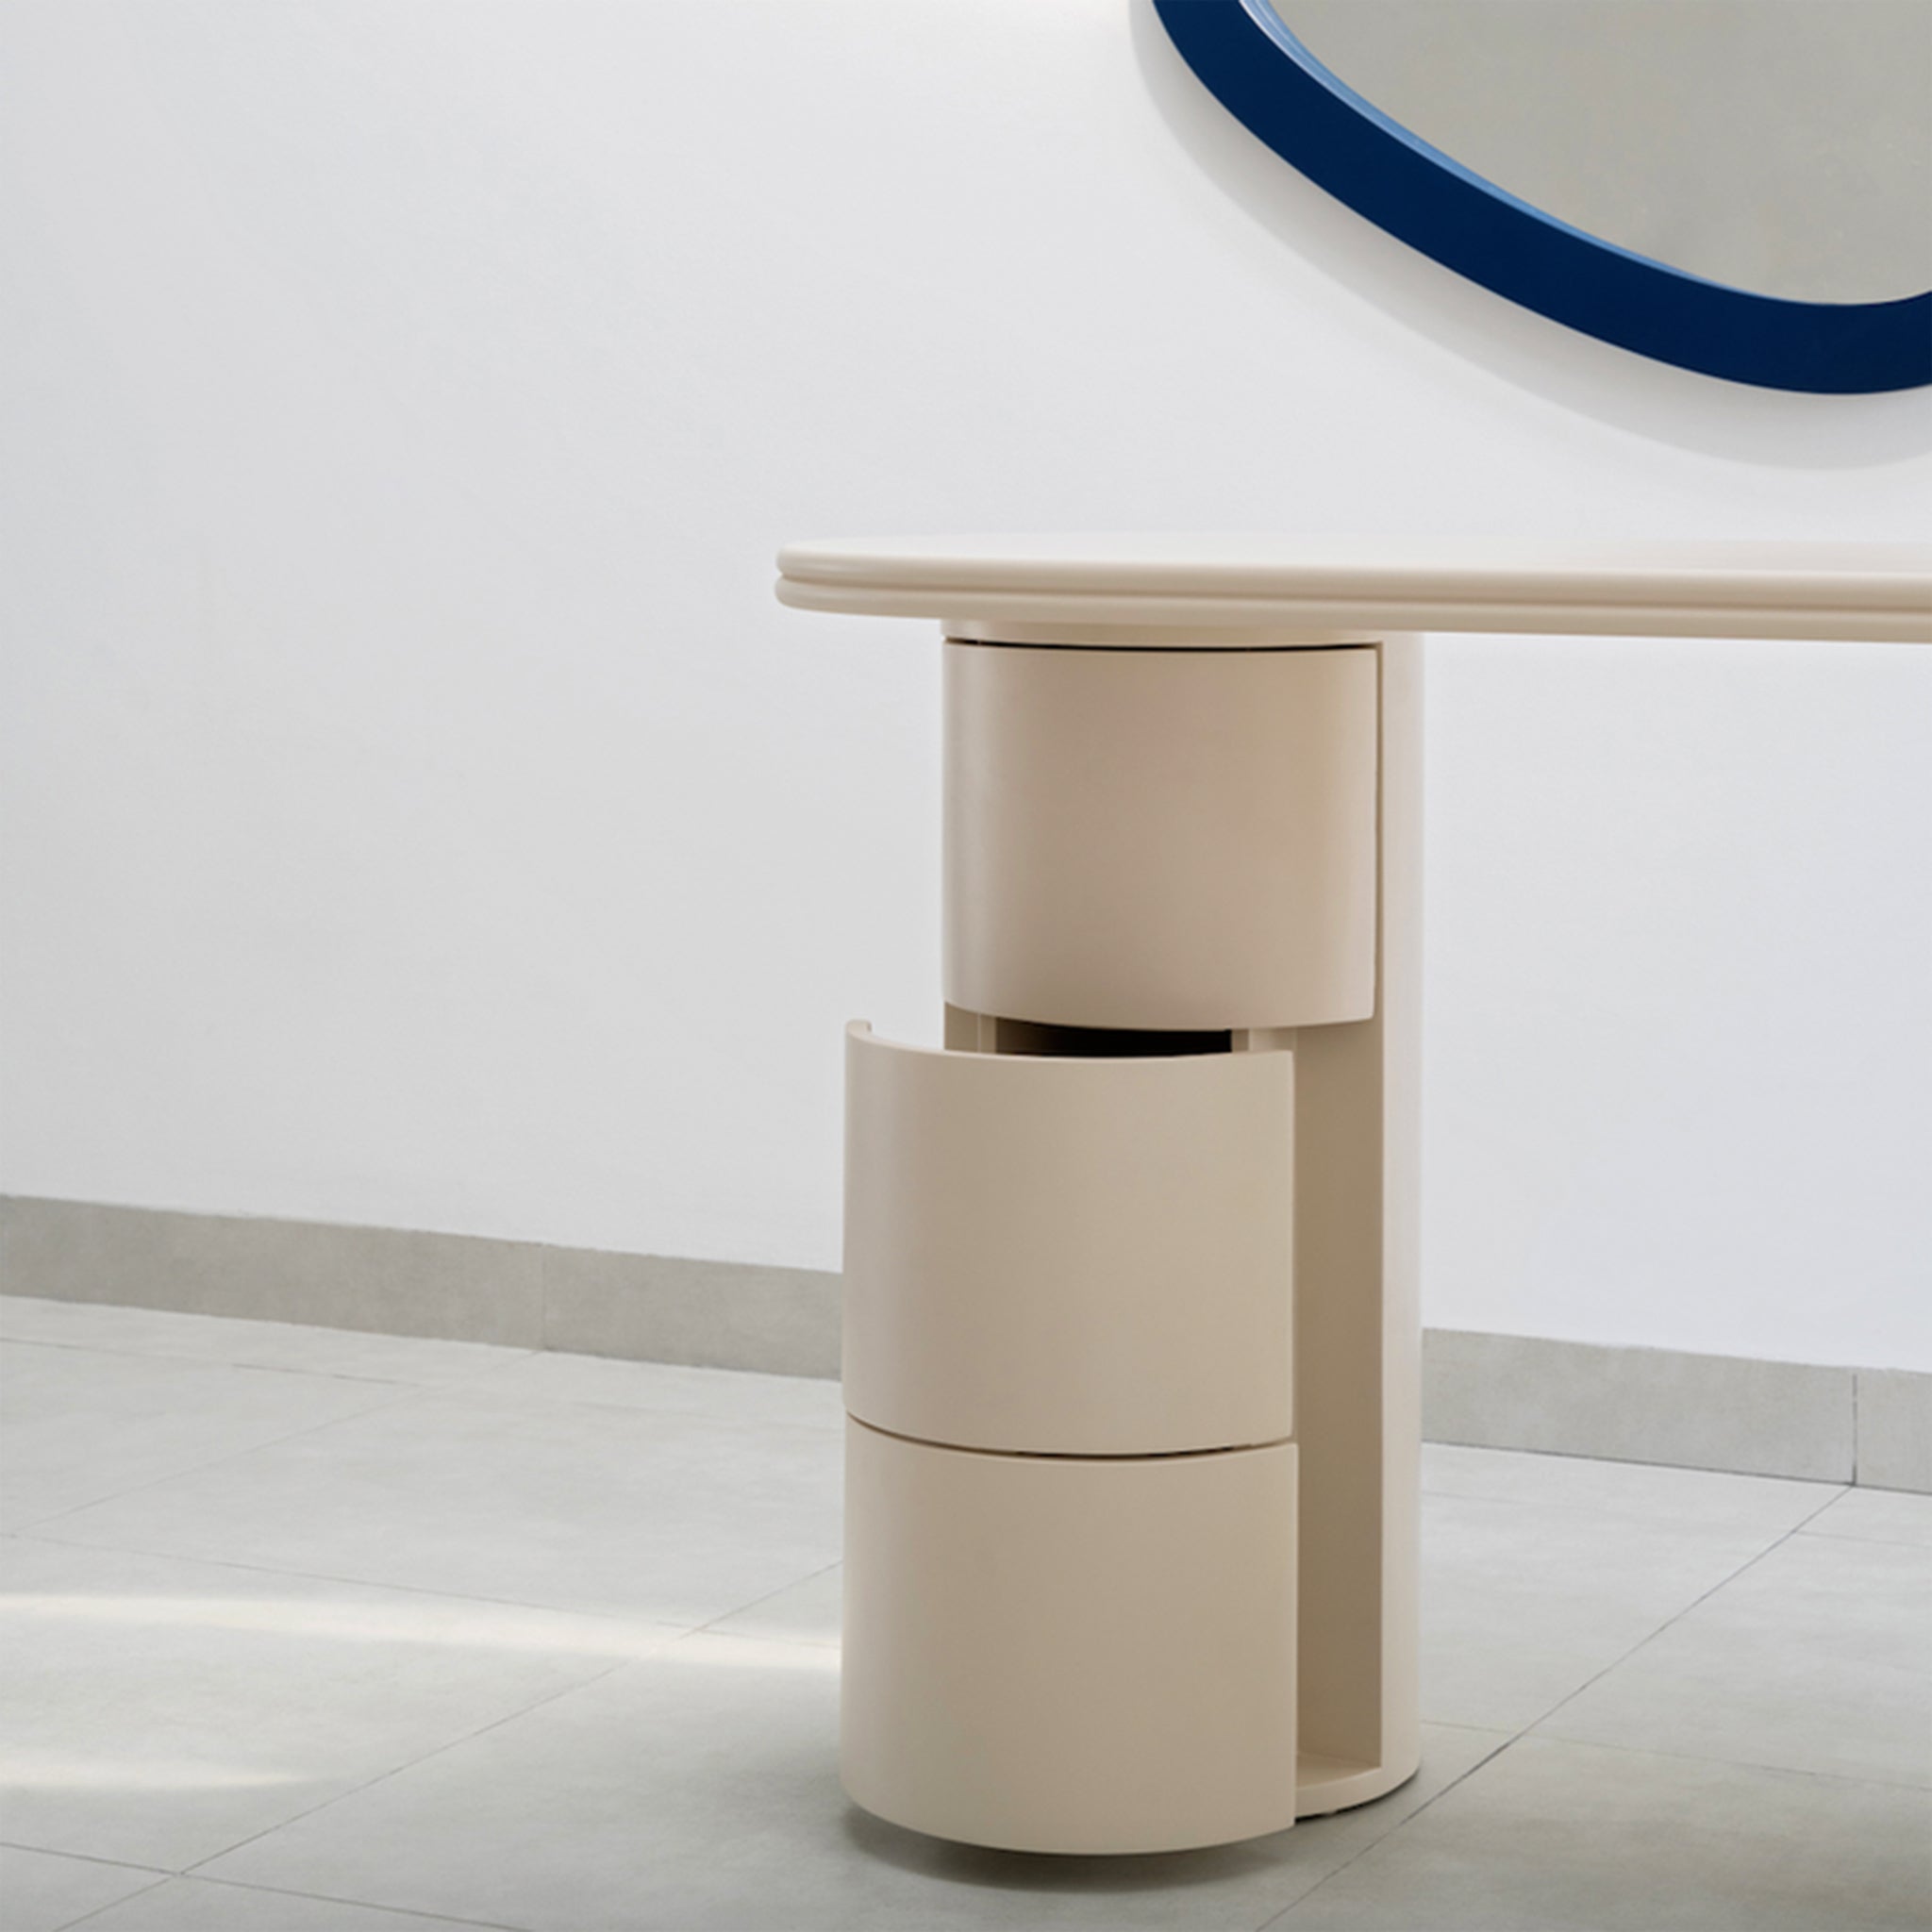 Elegant vanity desk with built-in round storage compartments